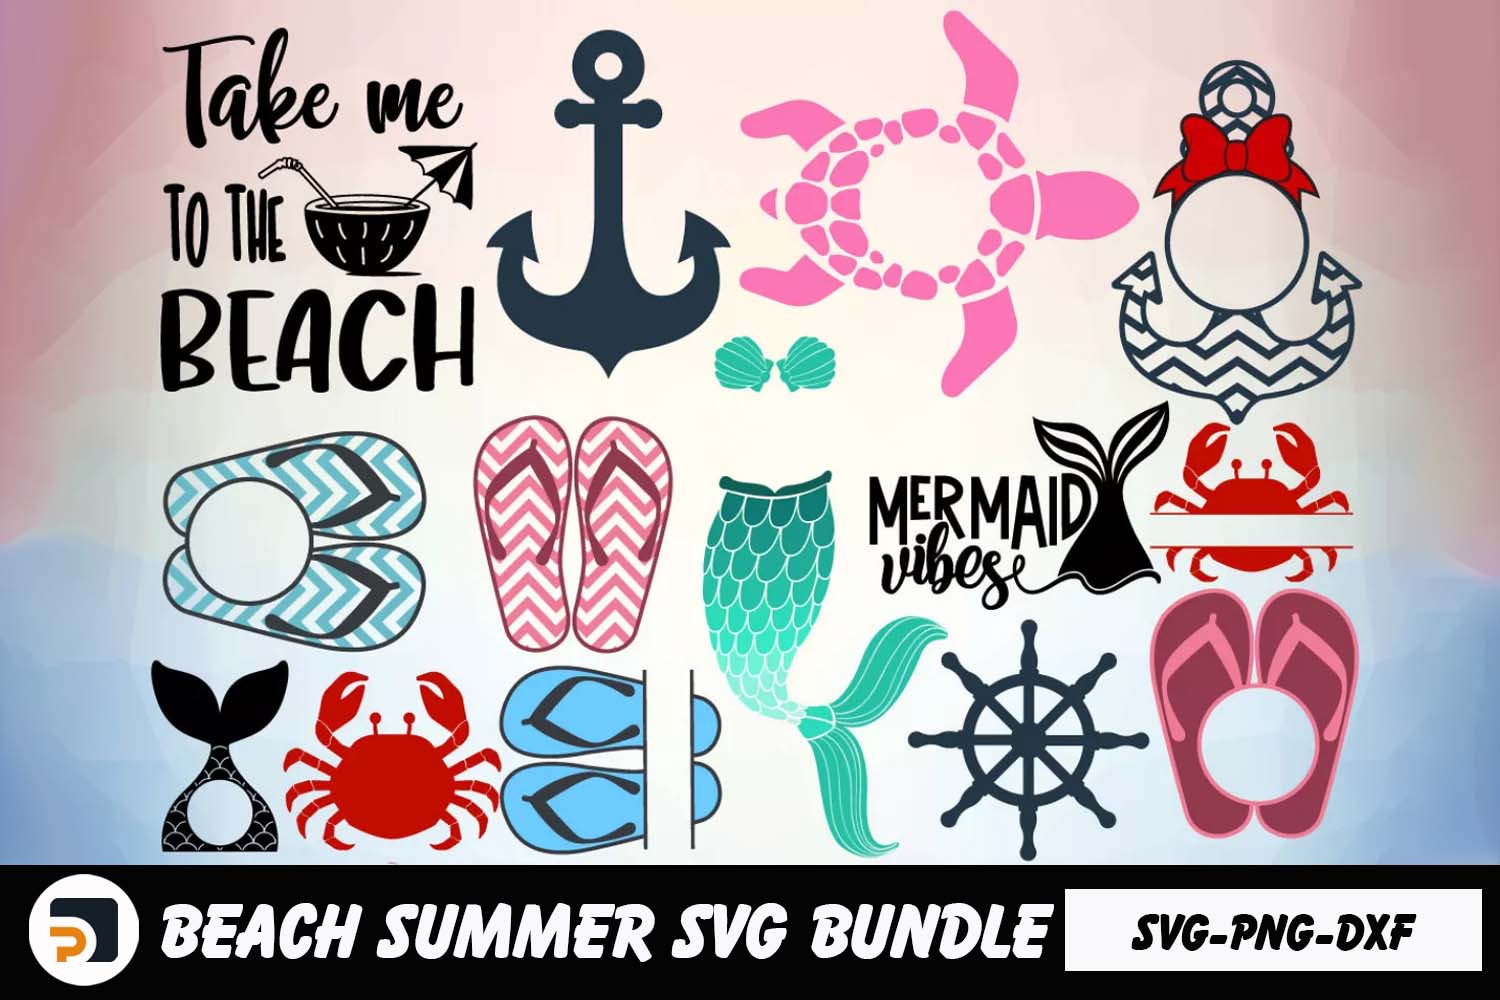 Beach SVG Bundle